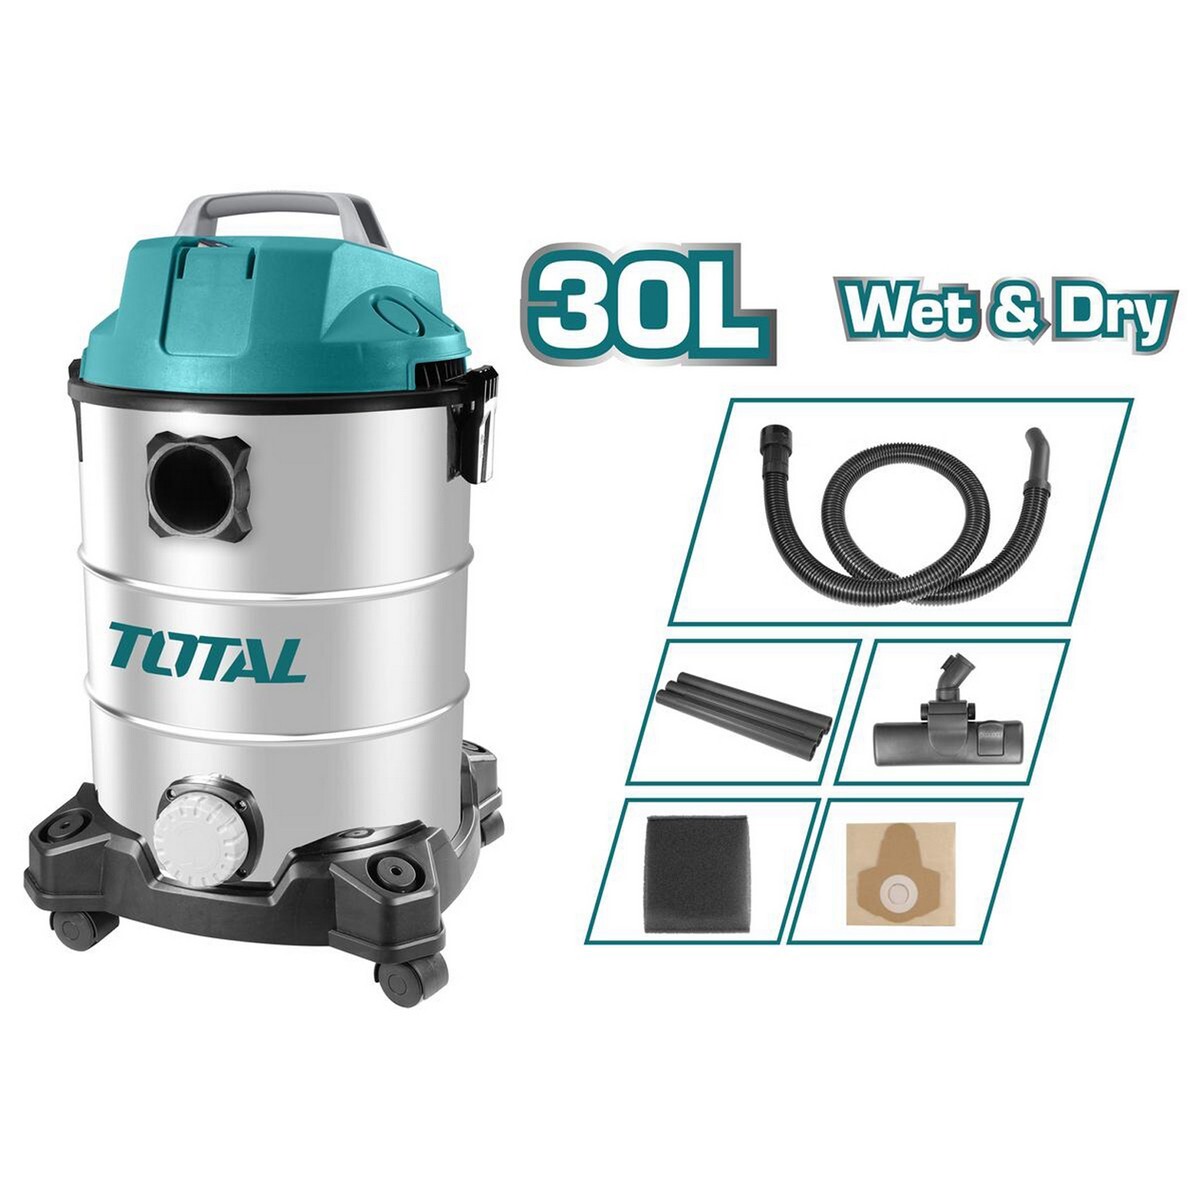 Total TVC13301 Wet & Dry Vacuum Cleaner 1300W